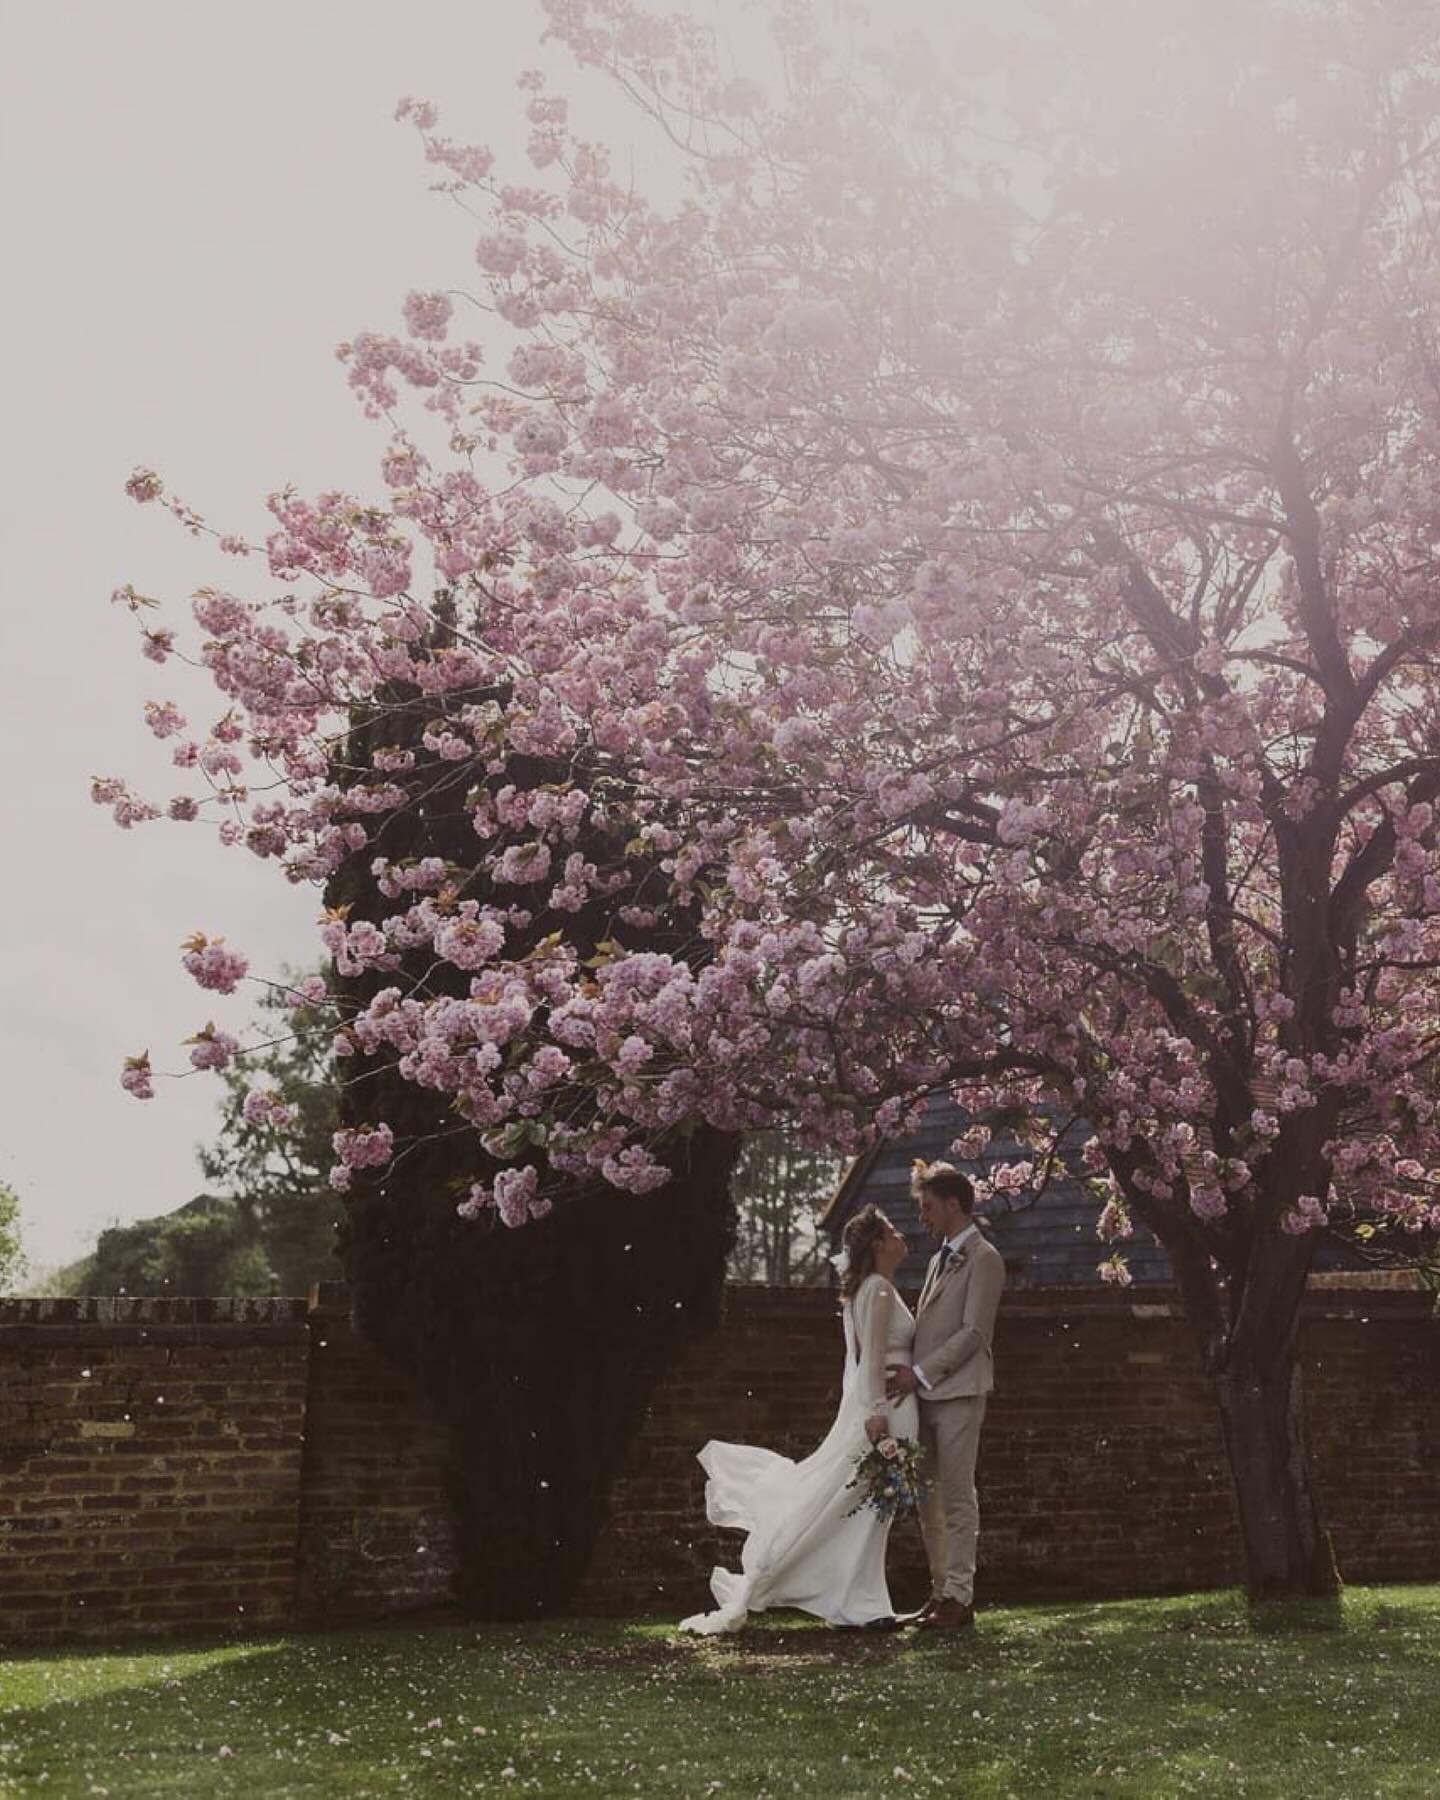 Currently editing: Meghan &amp; Alex&rsquo;s wedding at Lillibrooke Manor last week. A wonderful day in so many ways ❤️

#taketheheart #emmamarshall #londonweddingphotographer #cherryblossom 

VENUE: @lillibrooke_weddings
FLOWERS: @birdevents
DRESS: 